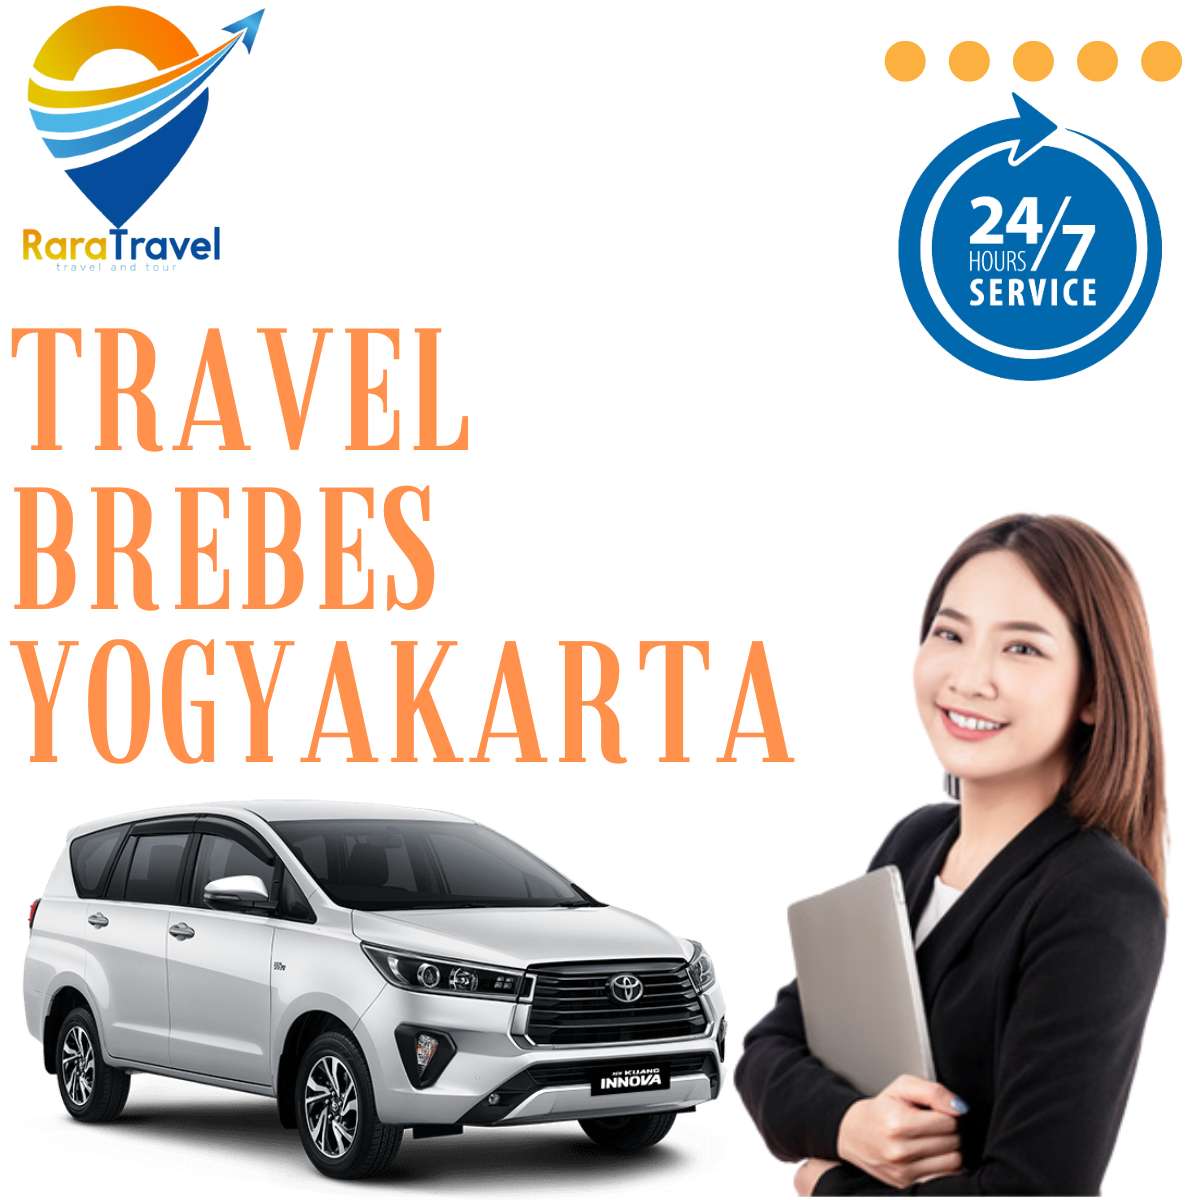 Travel Brebes Yogyakarta - RARATRAVEL.ID